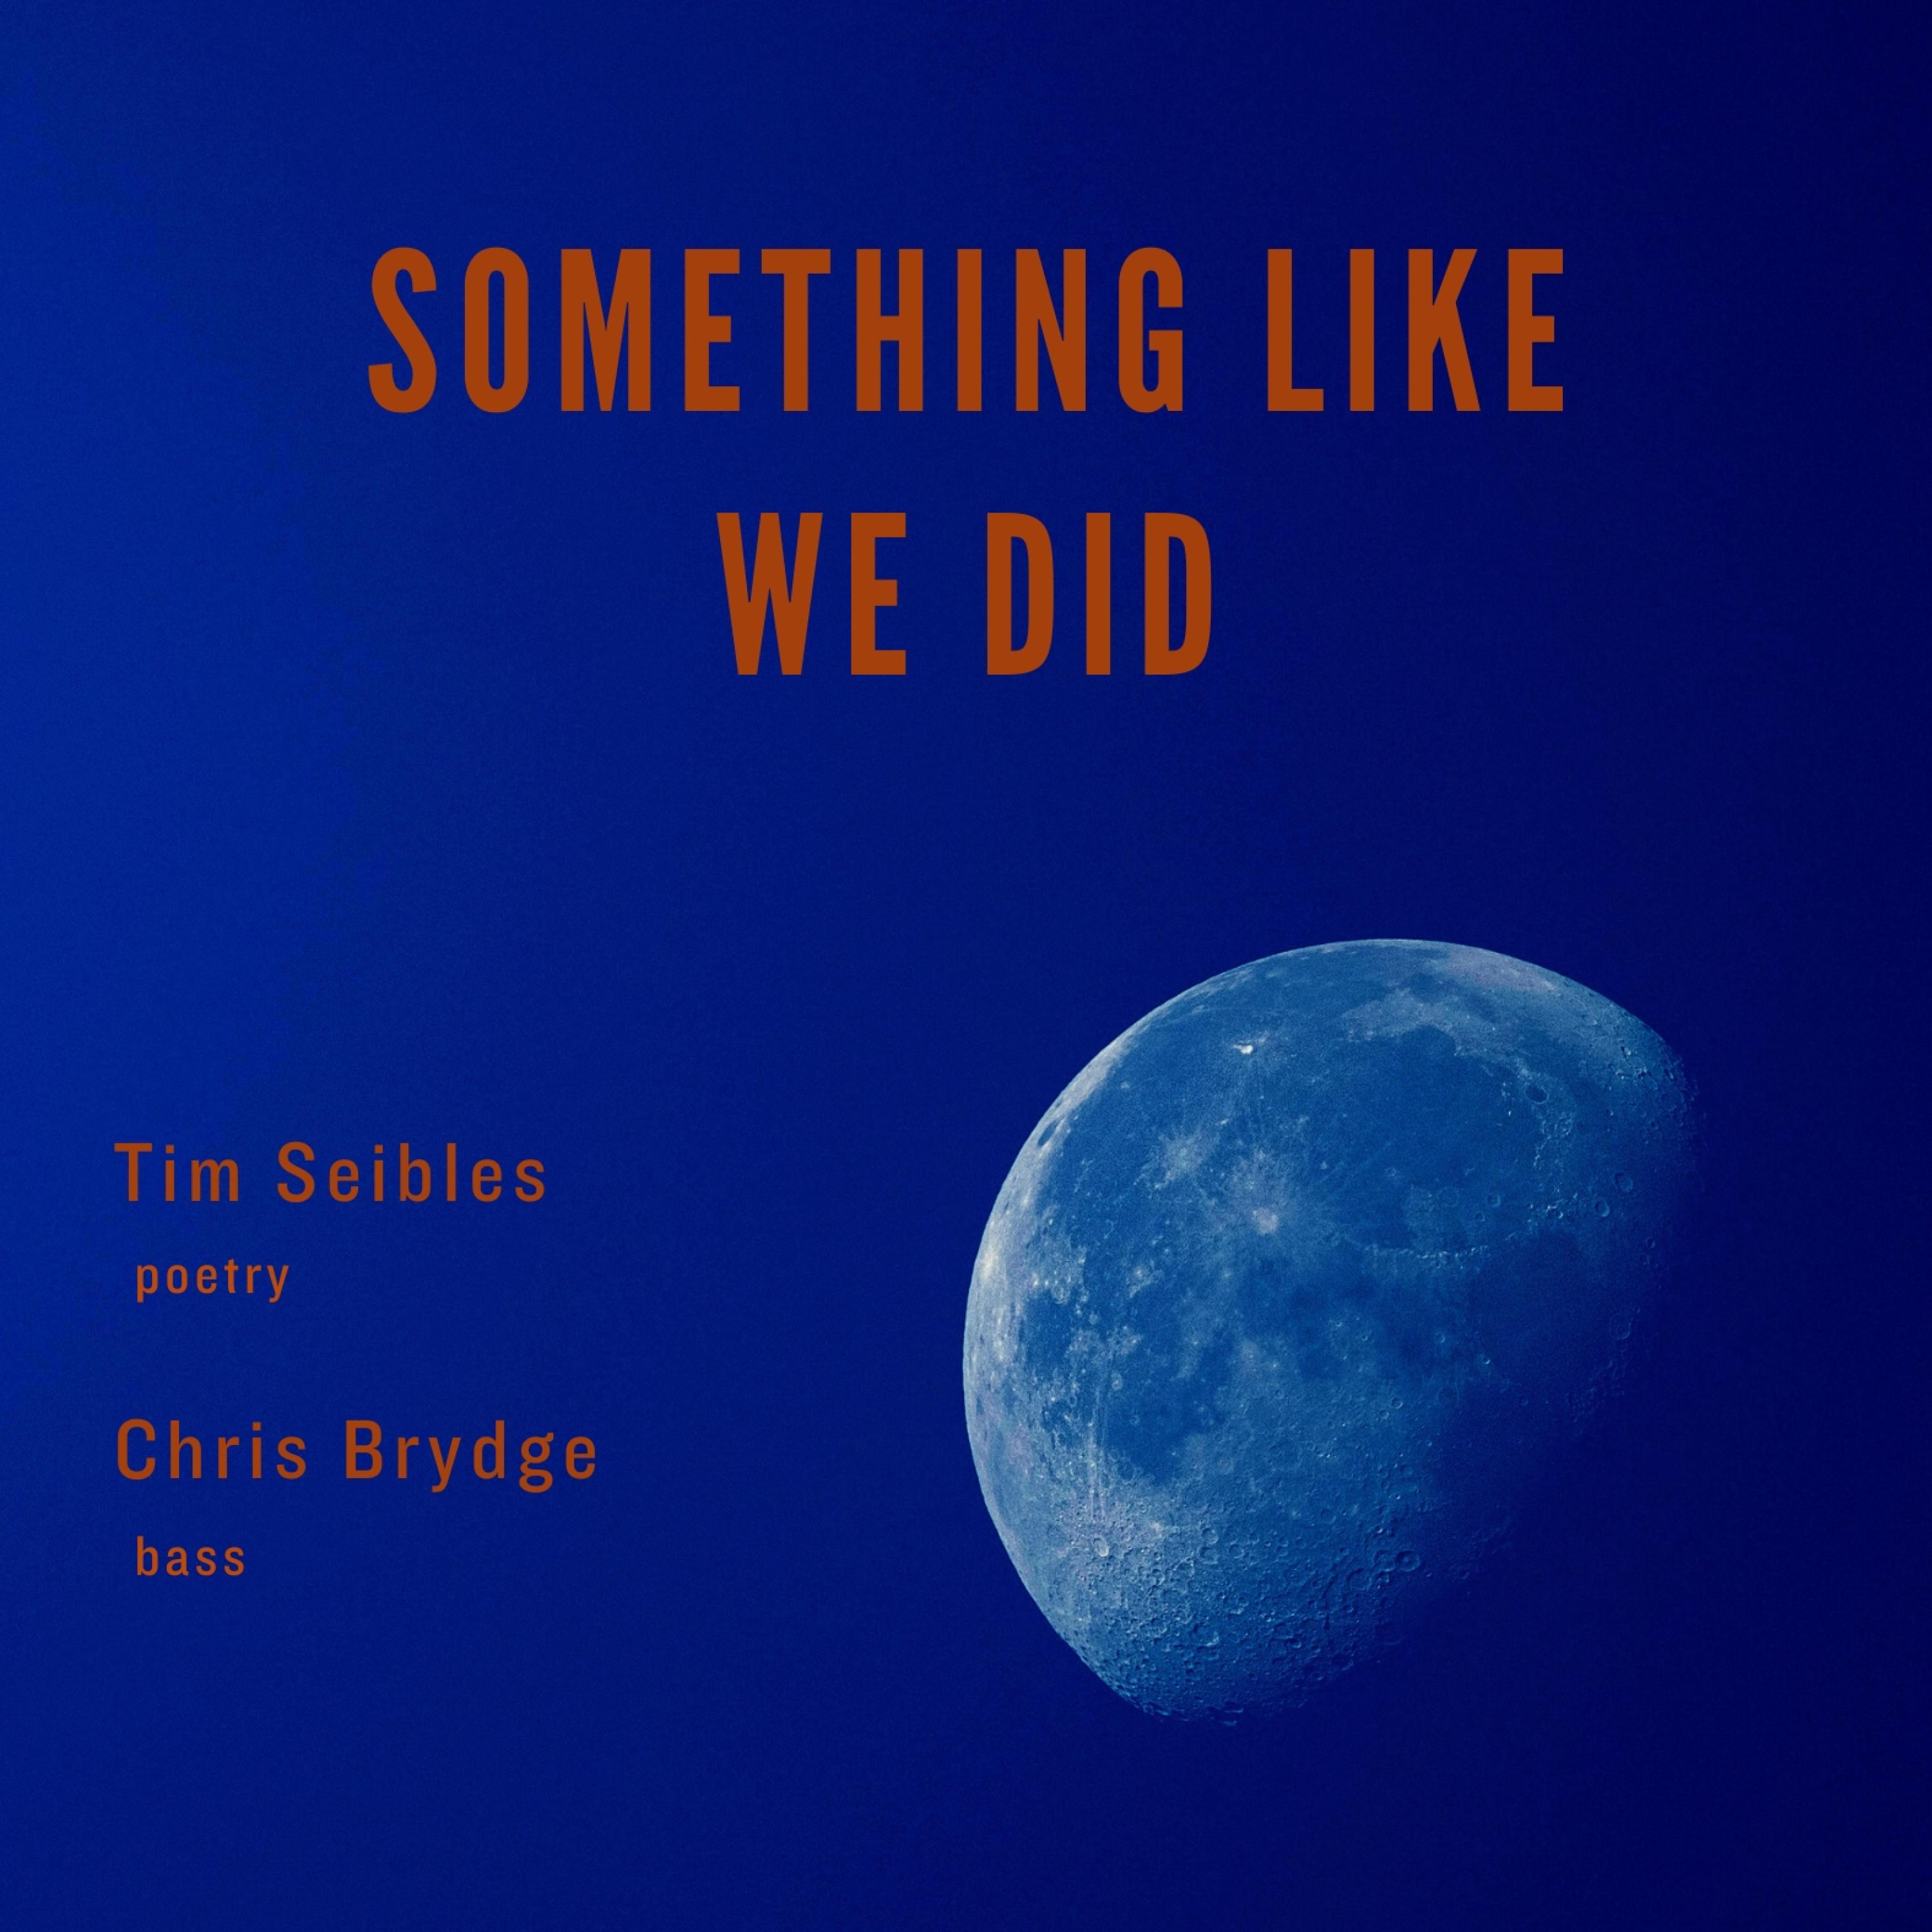 Chris Brydge - Harvest Moon (feat. Tim Seibles)